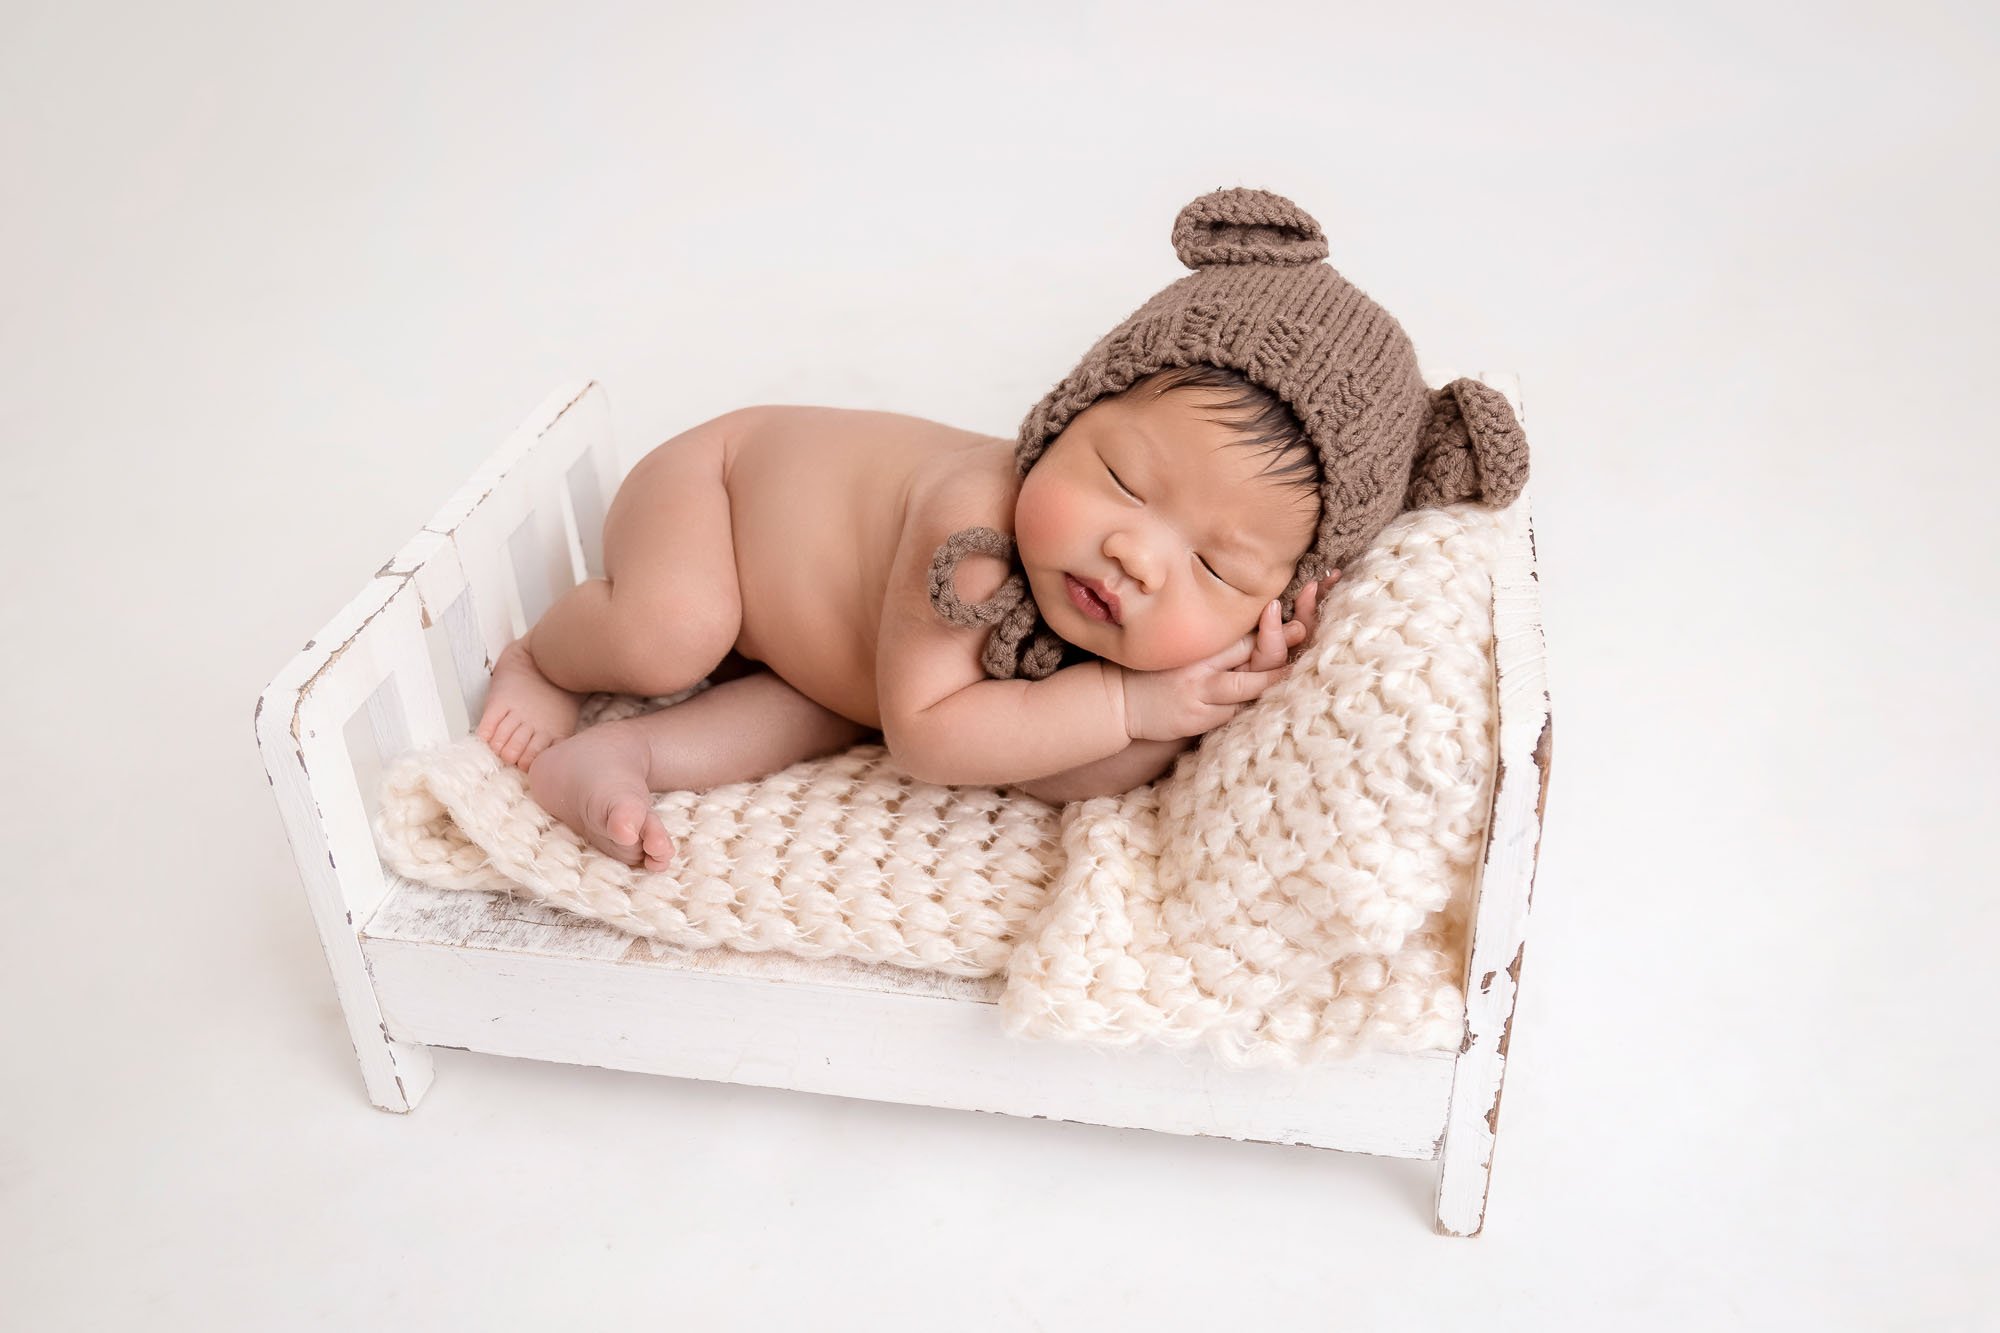 Newborn-photography-in-leeds-baby-on-bed-.jpg